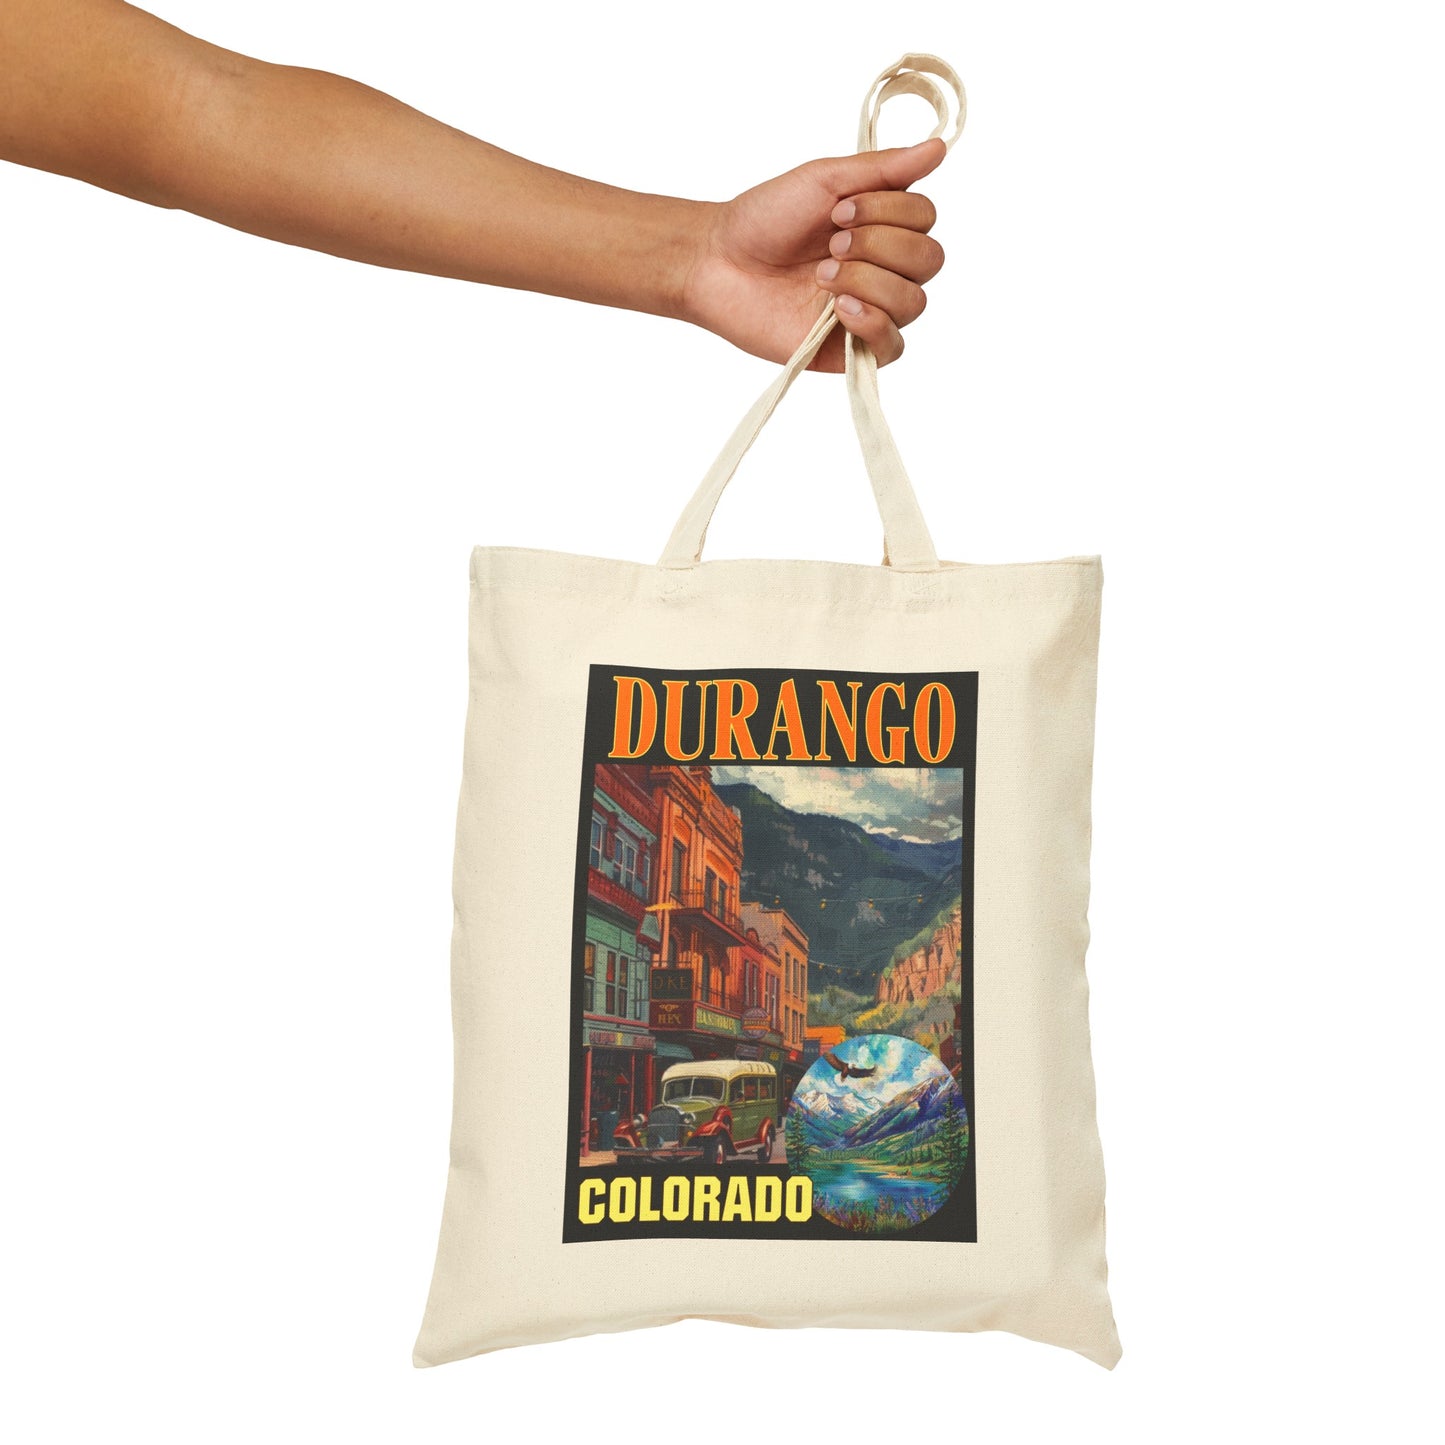 Durango Cotton Canvas Tote Bag